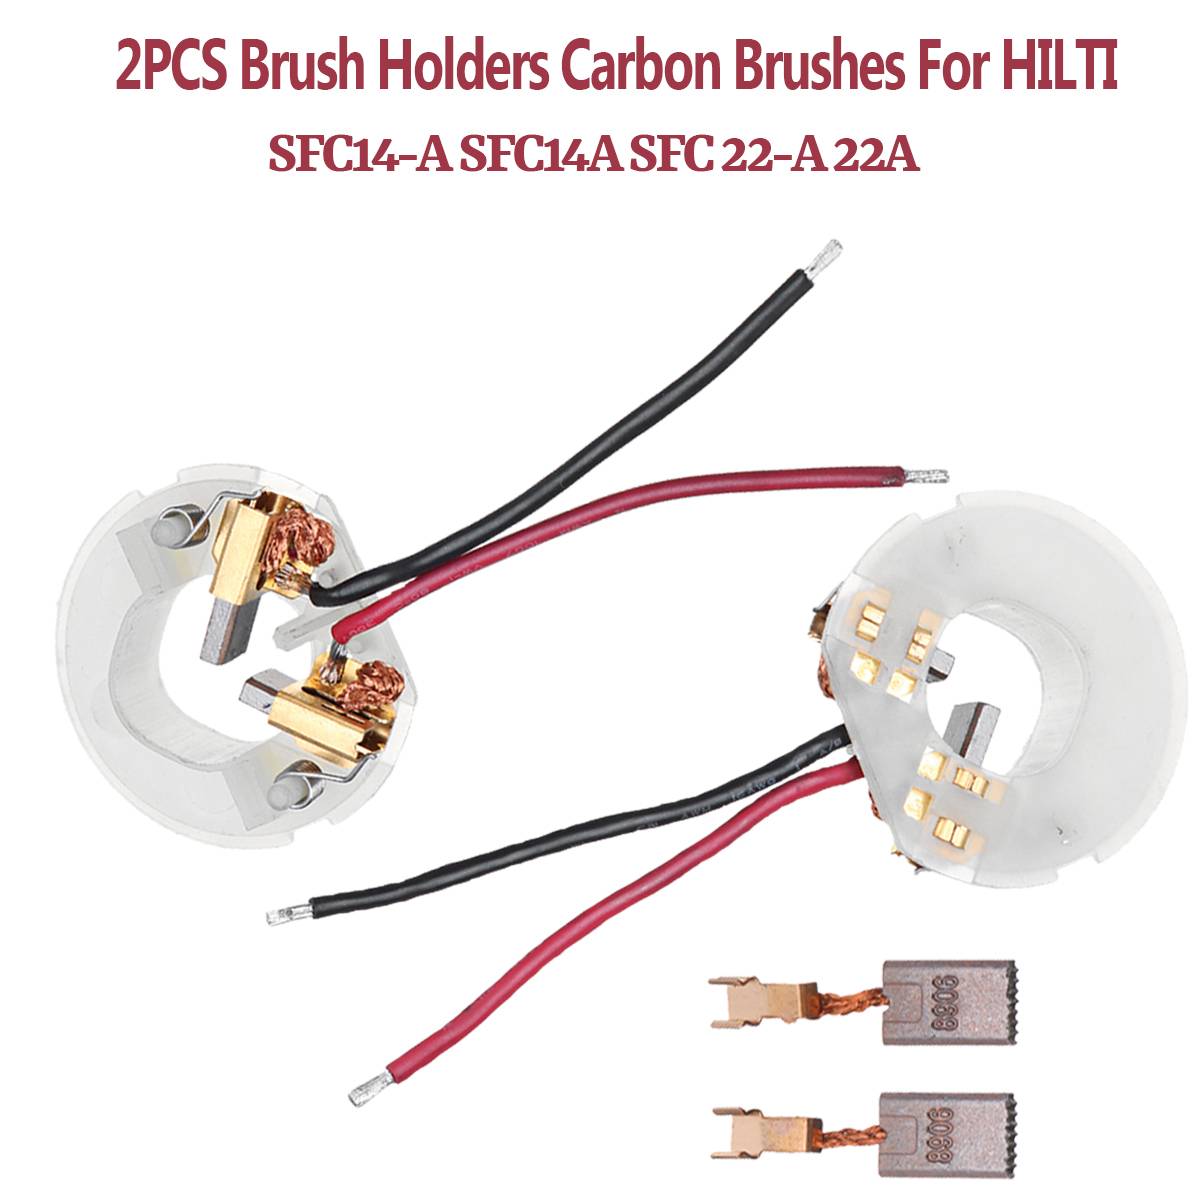 Carbon Brush For HILTI SFC14-A SFC14A SFC 22-A 22A Accessories 3*8*13mm Durable 